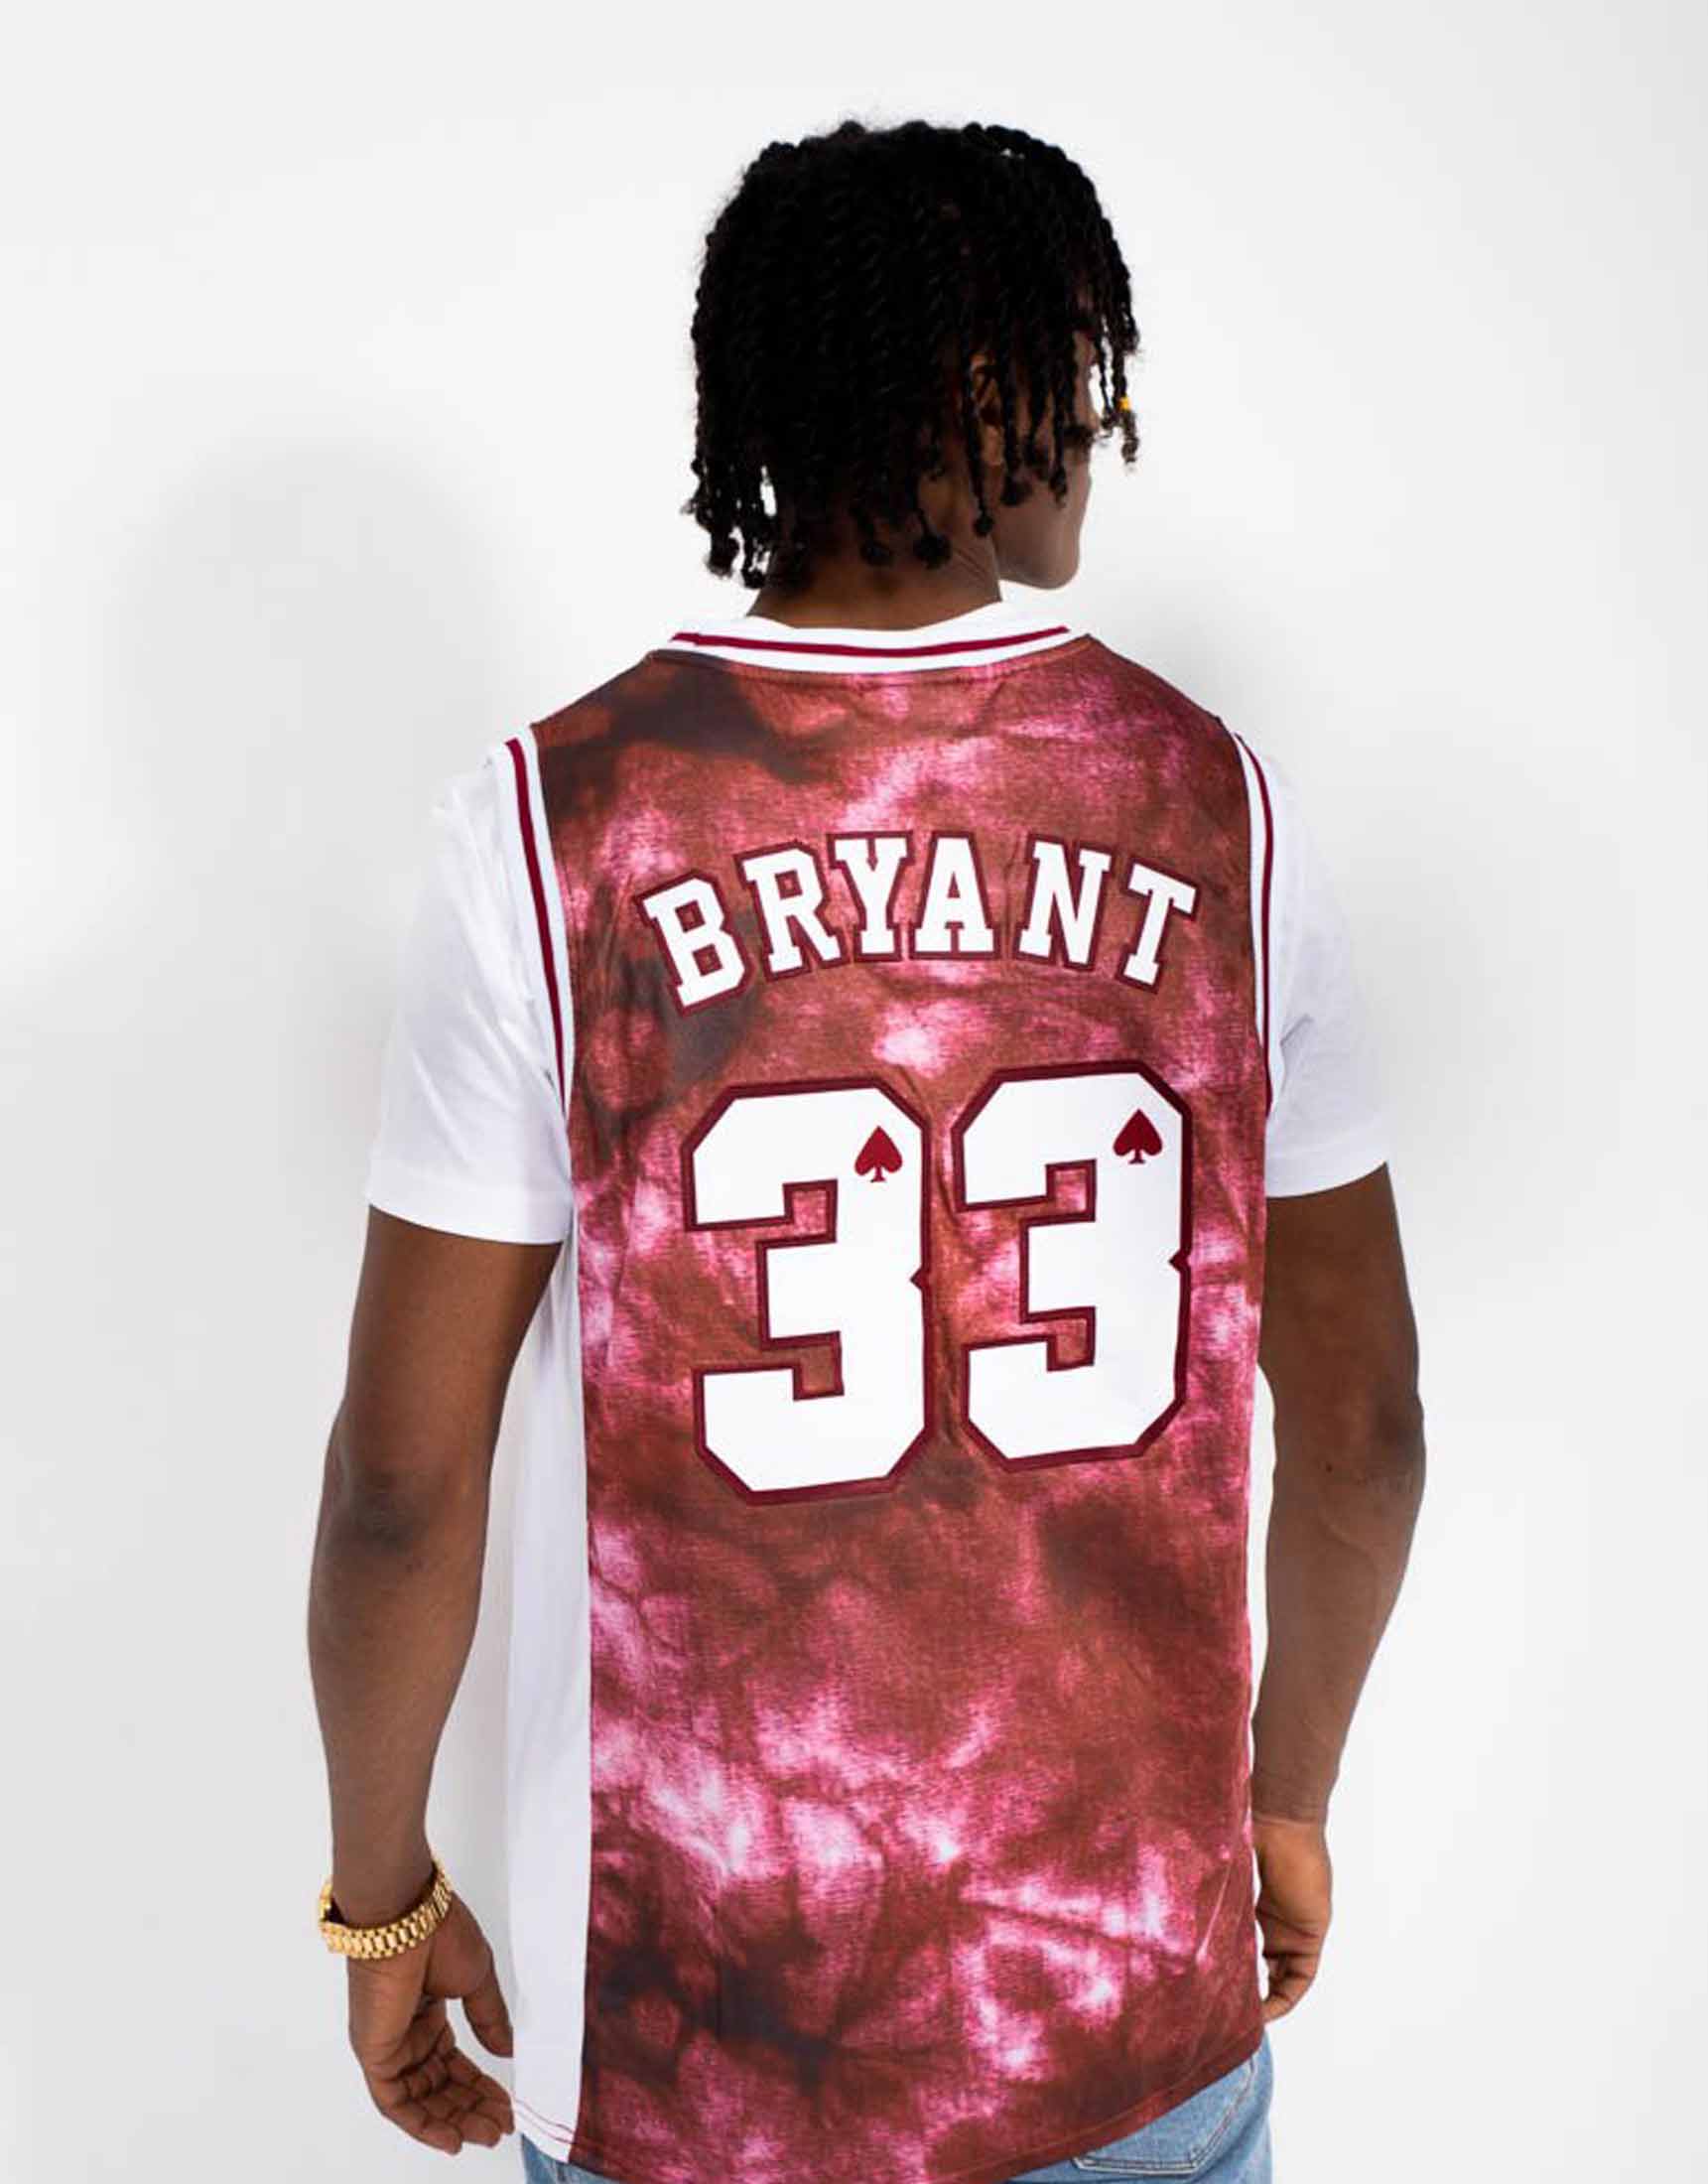 Kobe Bryant #33 Lower Merion Tie-Dye Edition Jersey 3XL